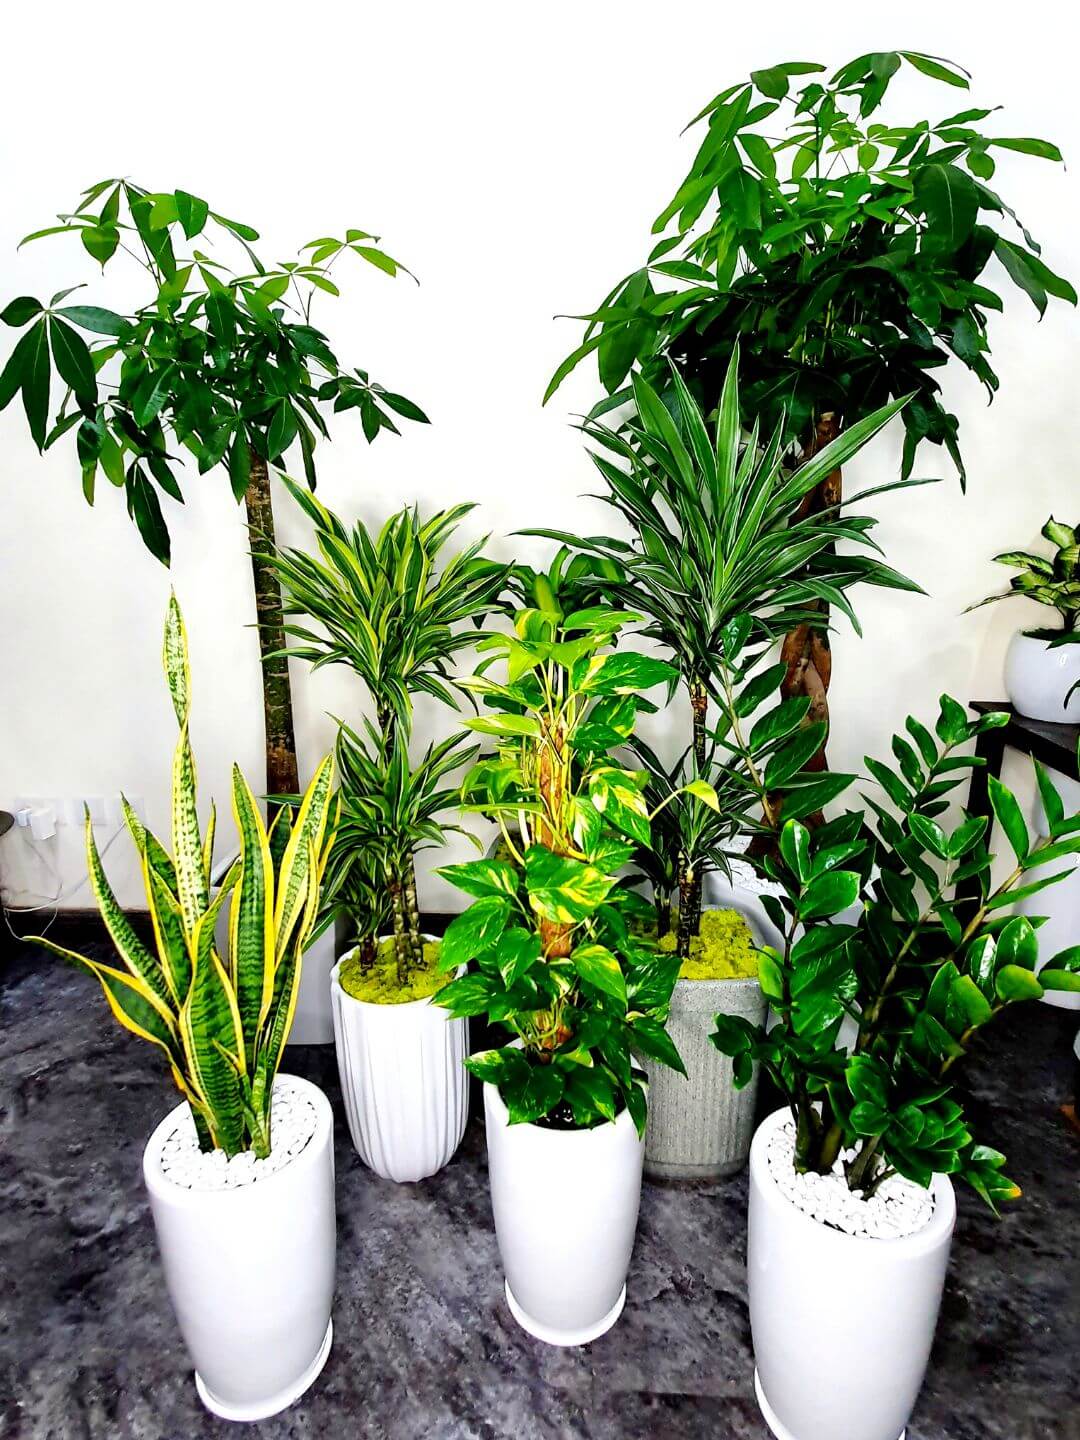 Corporate Office Bundle 8 Premium Plants | Low Light Planted in Grey Ceramic Pot